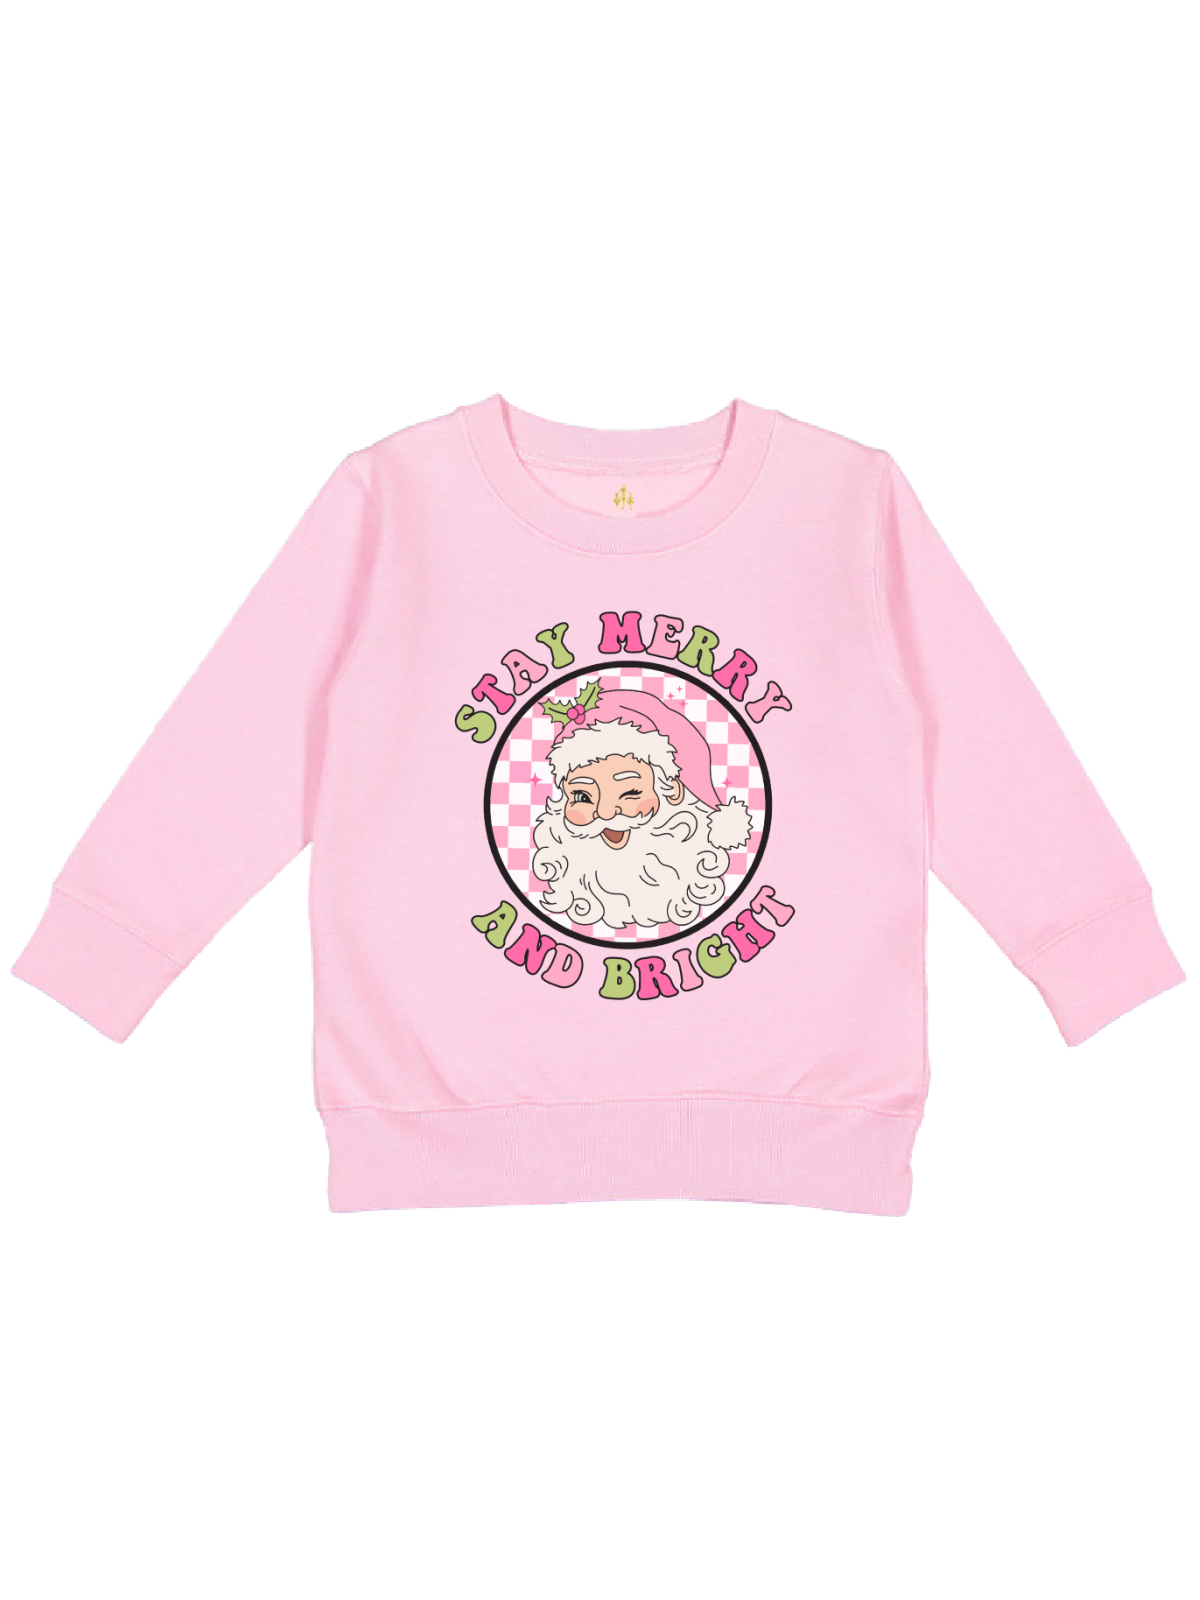 Stay Merry and Bright Kids Santa Sweatshirt